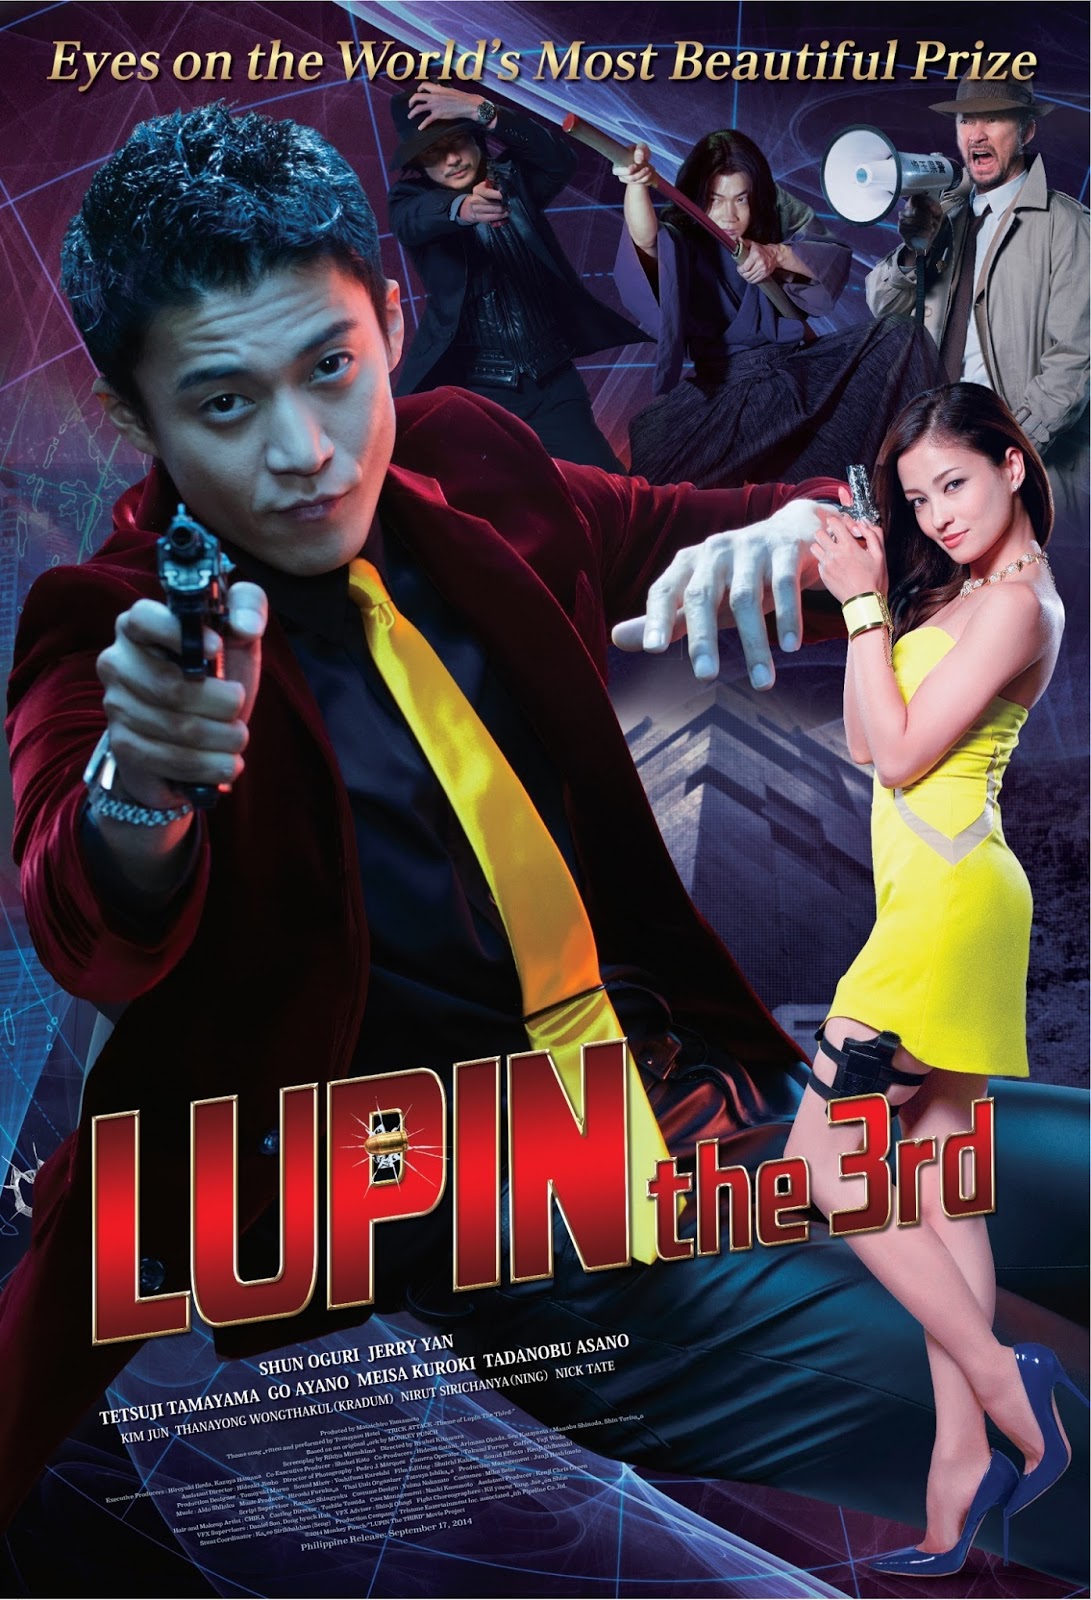 Lupin III – Il film